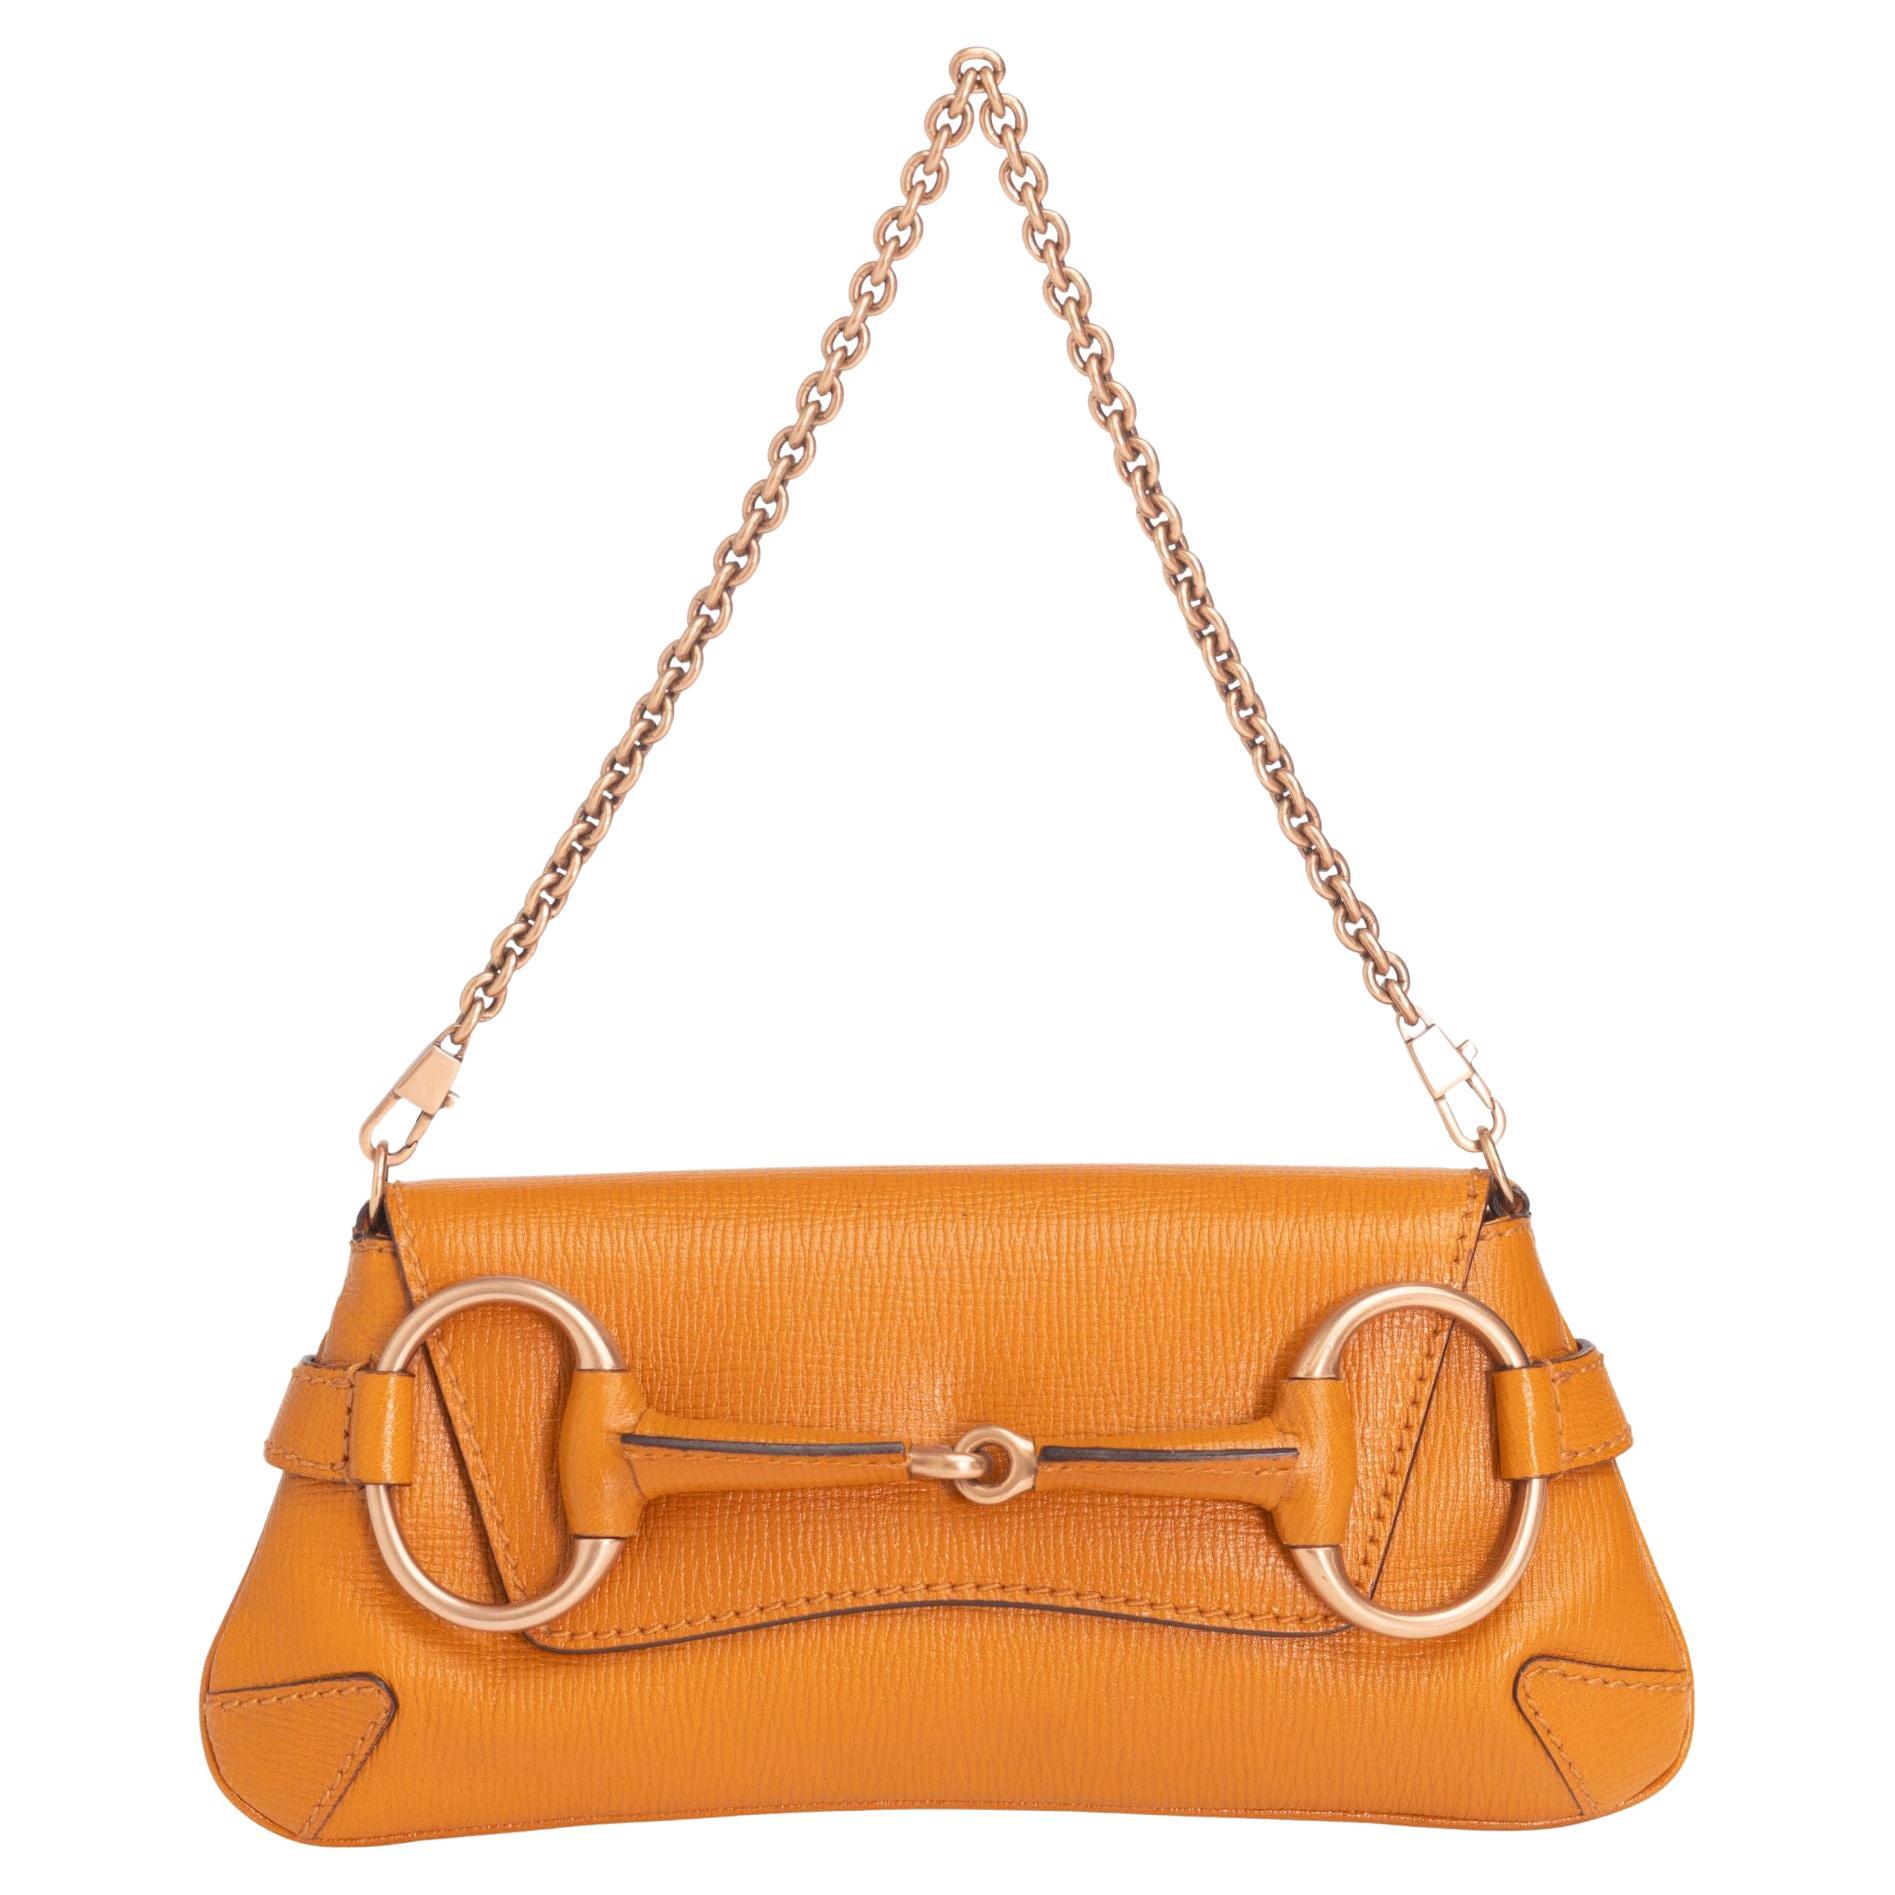 Gucci Caramel Brown Leather Horsebit Chain Clutch Bag